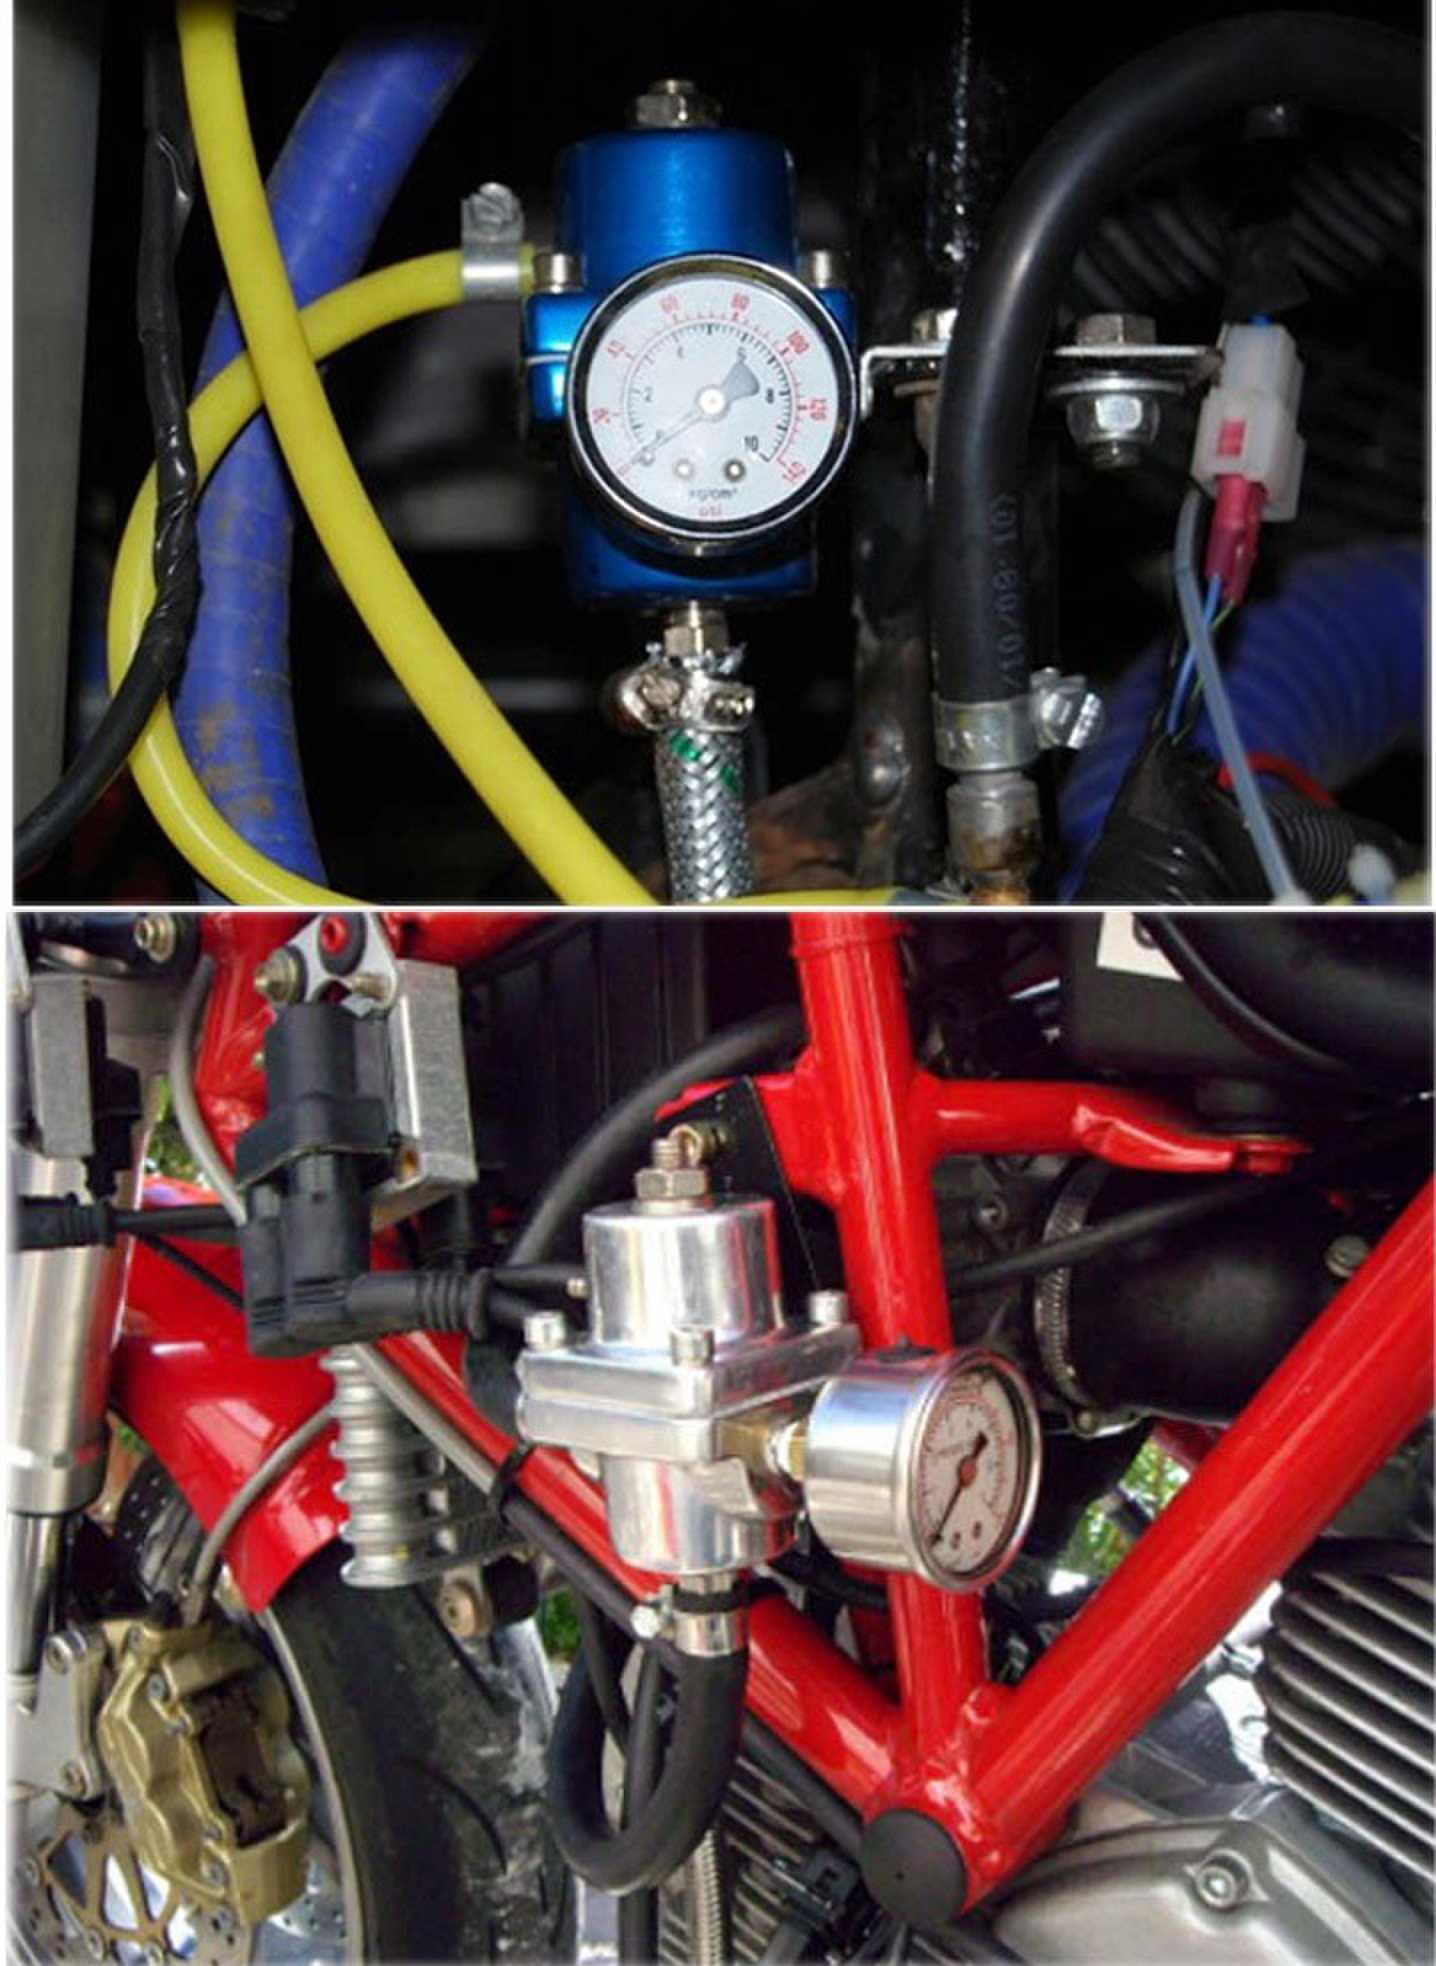 RASTP Universal Adjustable Fuel Pressure Regulator Gauge 0-140 PSI EF EG EK D16 - RASTP